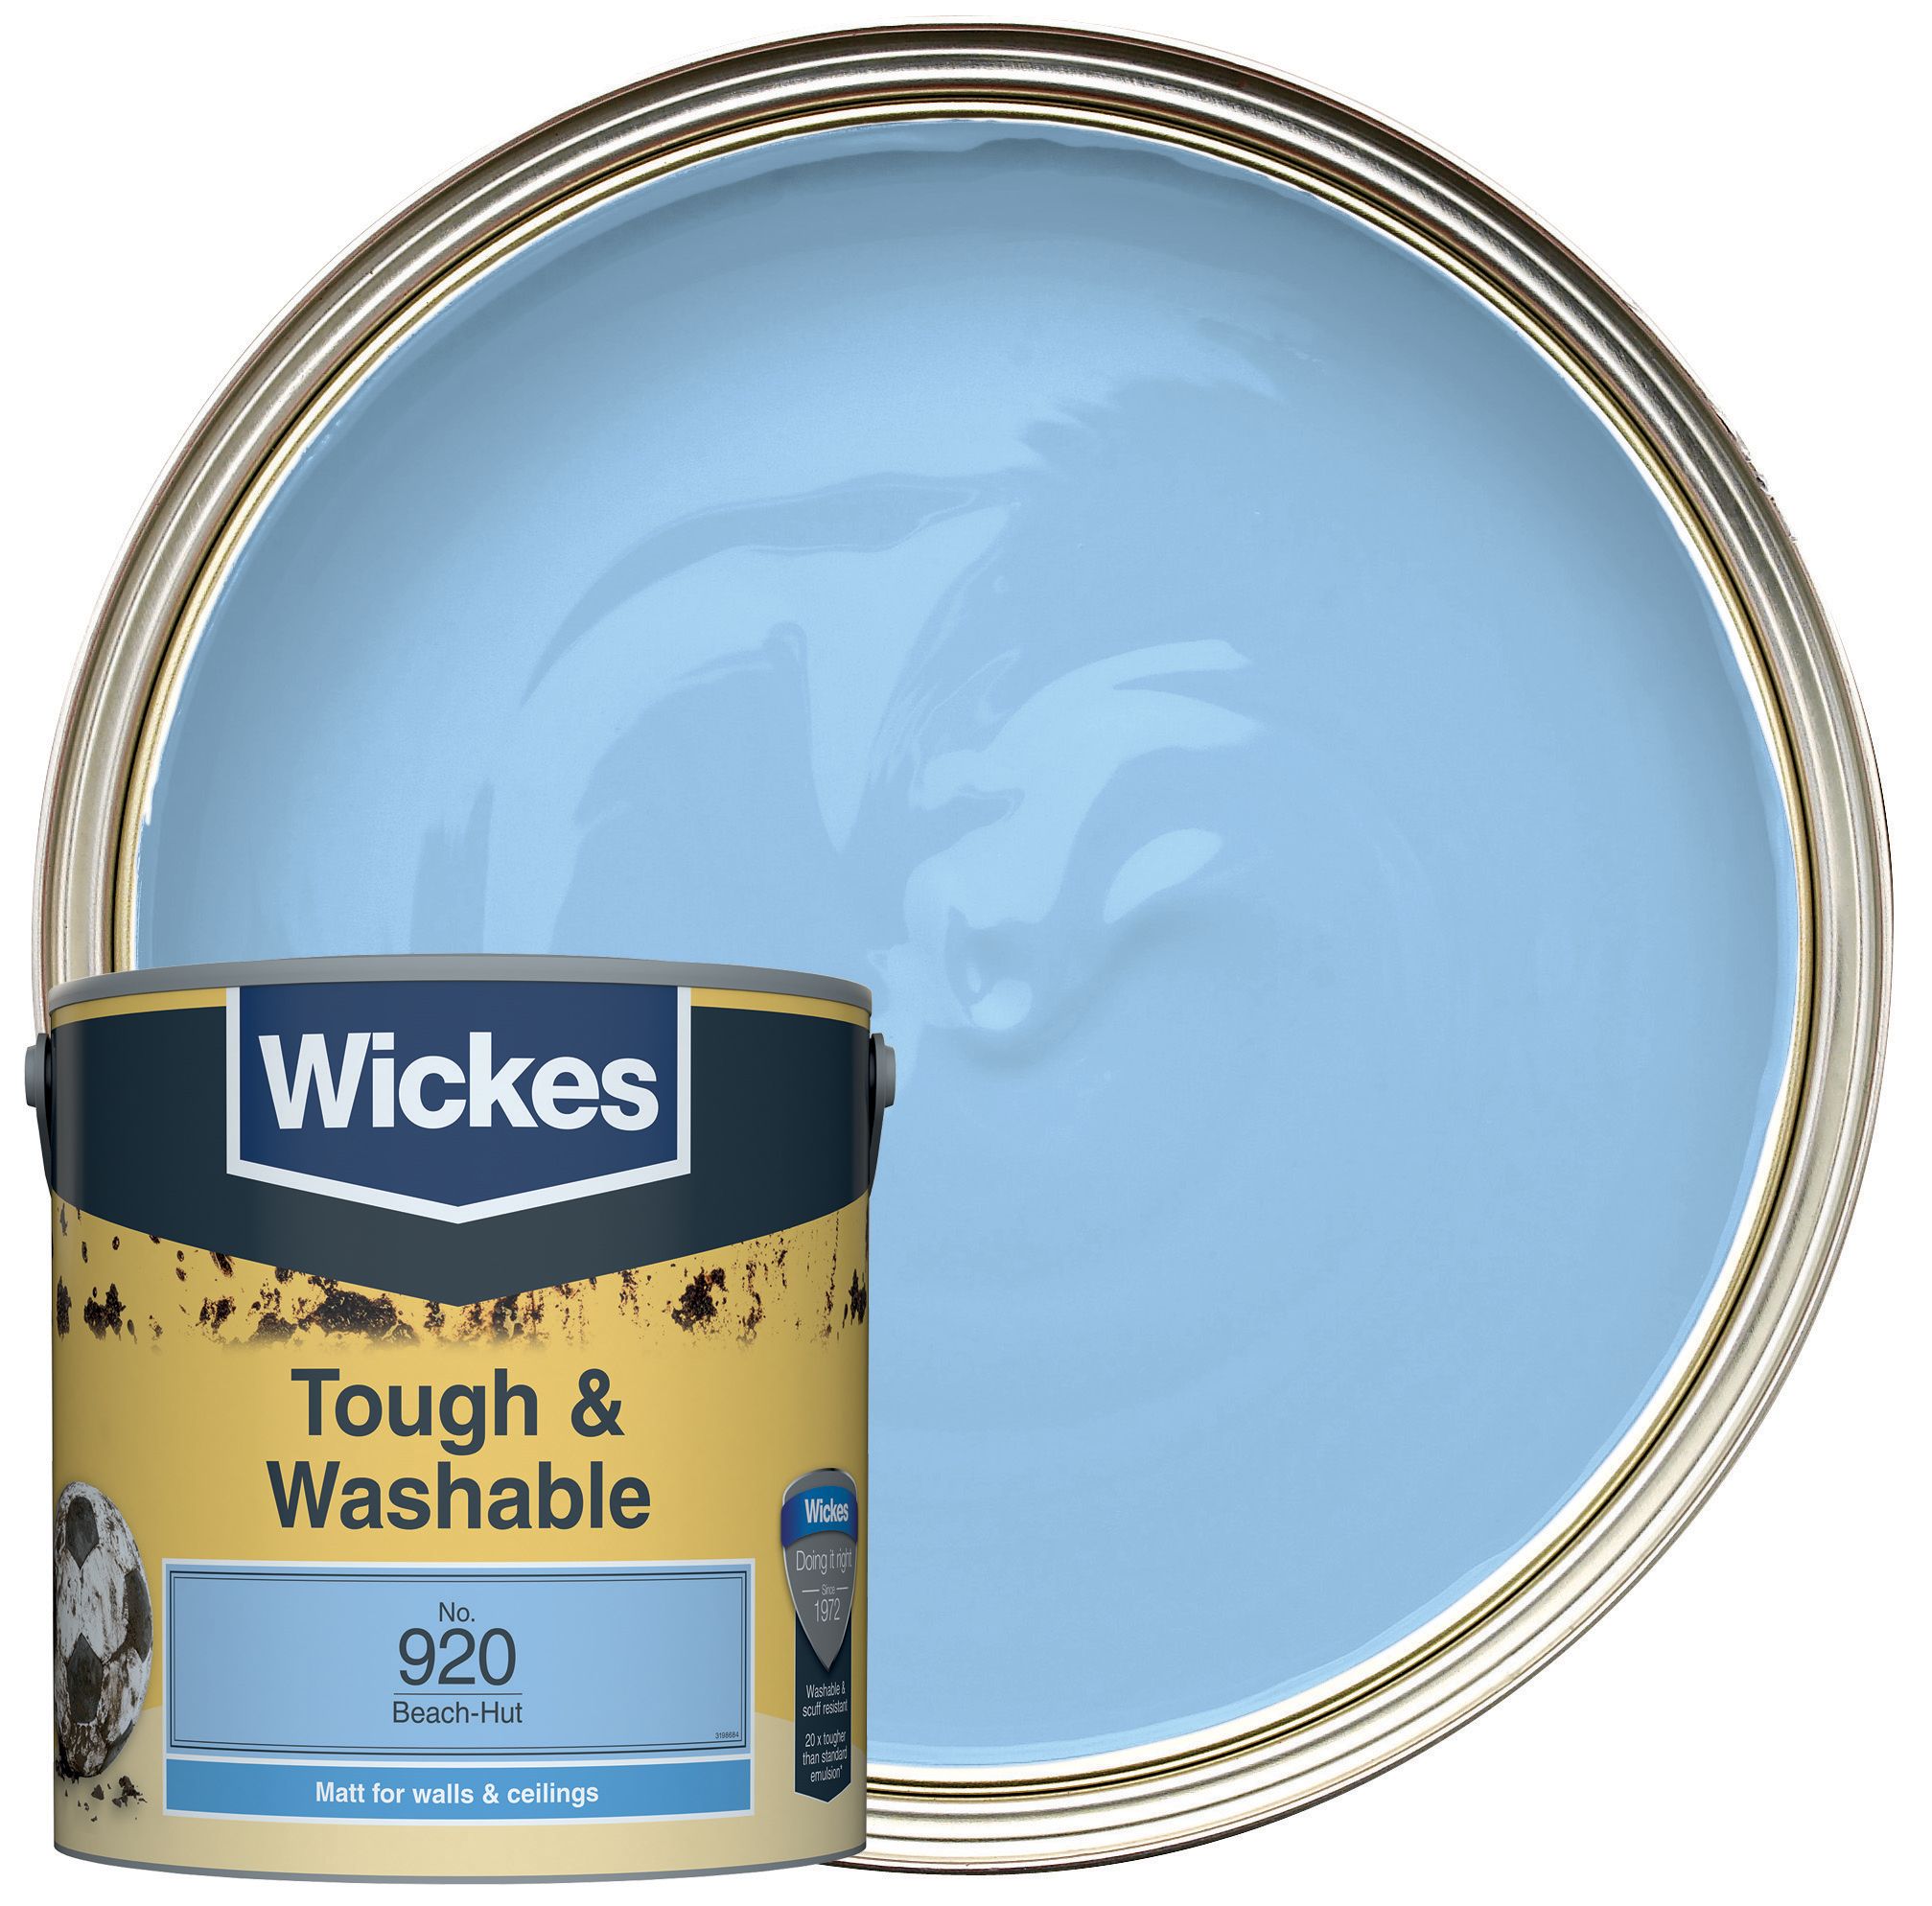 Wickes Tough & Washable Matt Emulsion Paint - Beach Hut No.920 - 2.5L